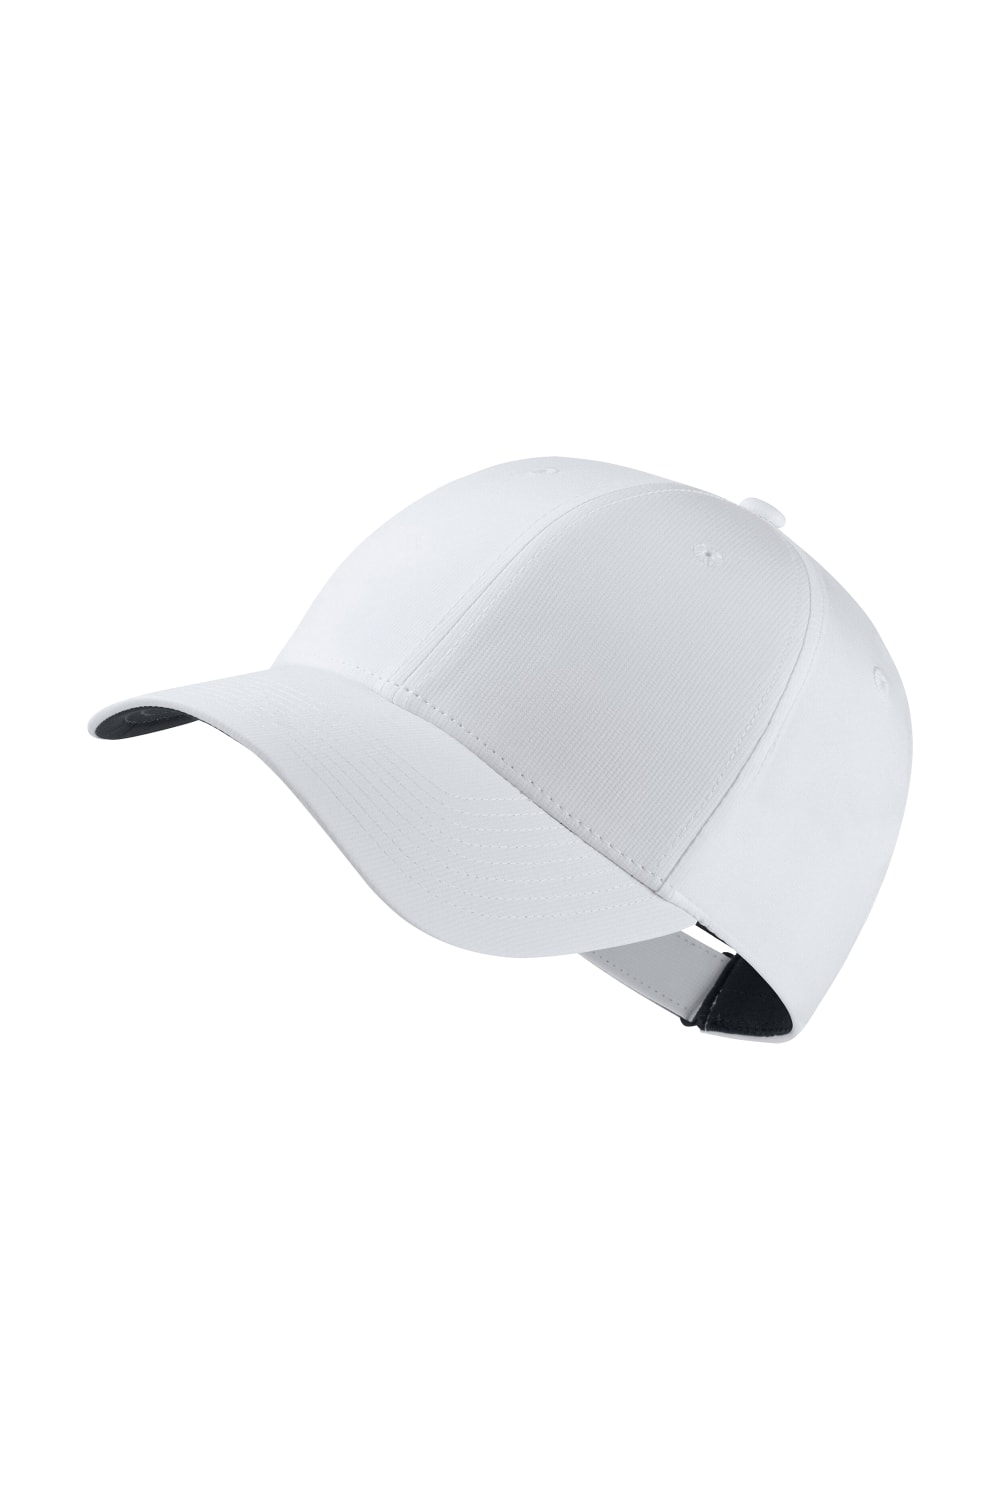 Nike Tech Cap (White/Anthracite/Black)